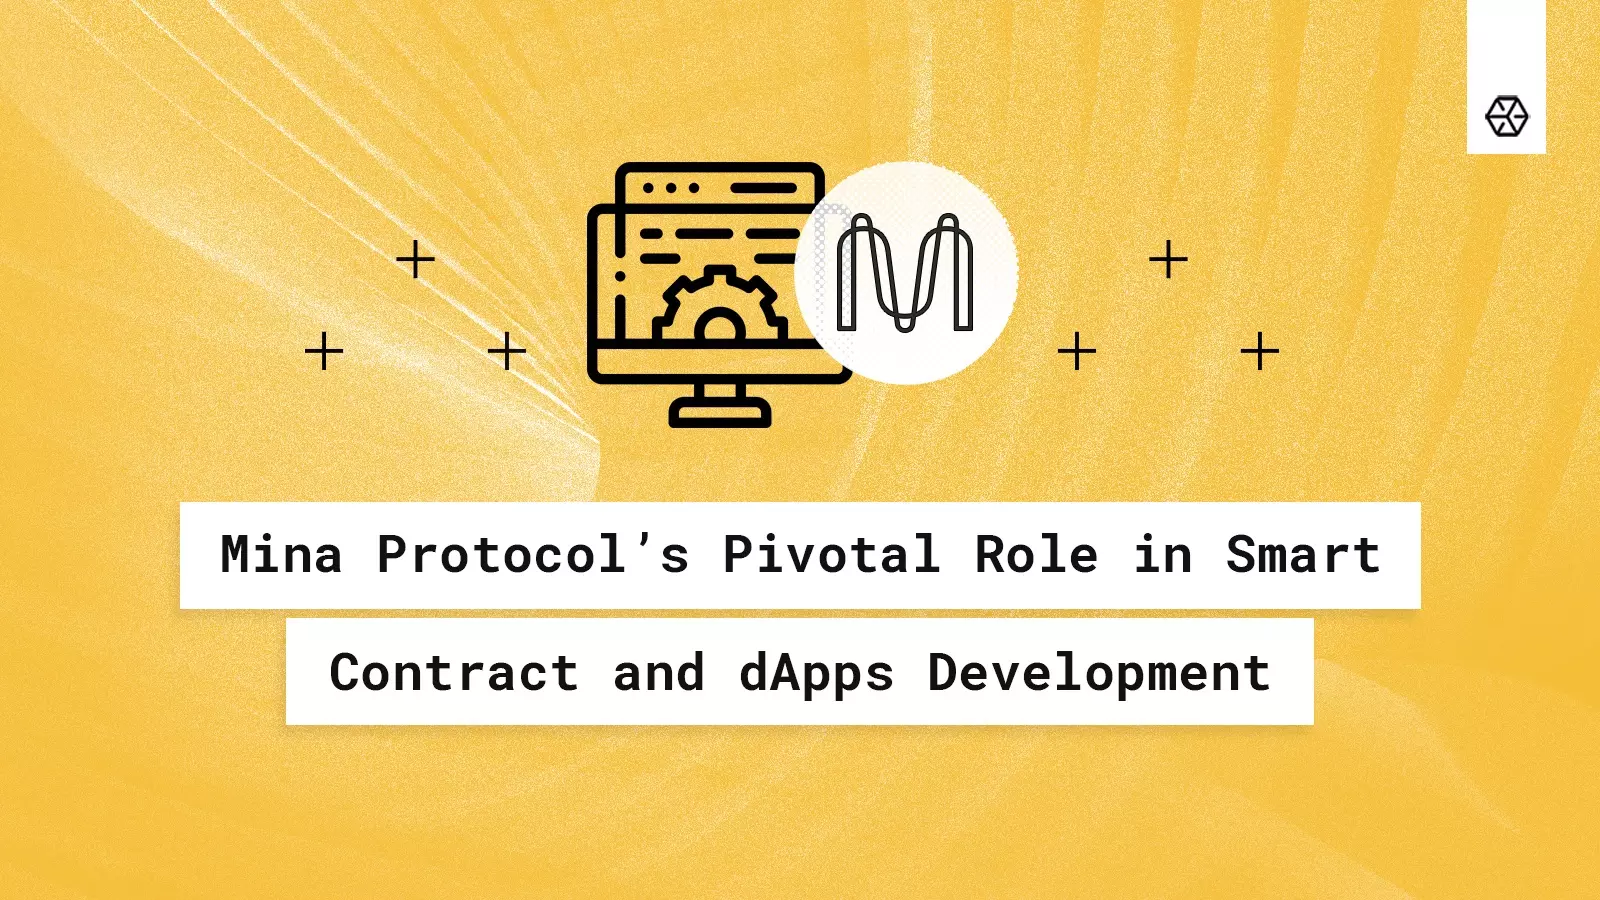 Mina Protocol’s Pivotal Role in Smart Contract and dApps Development